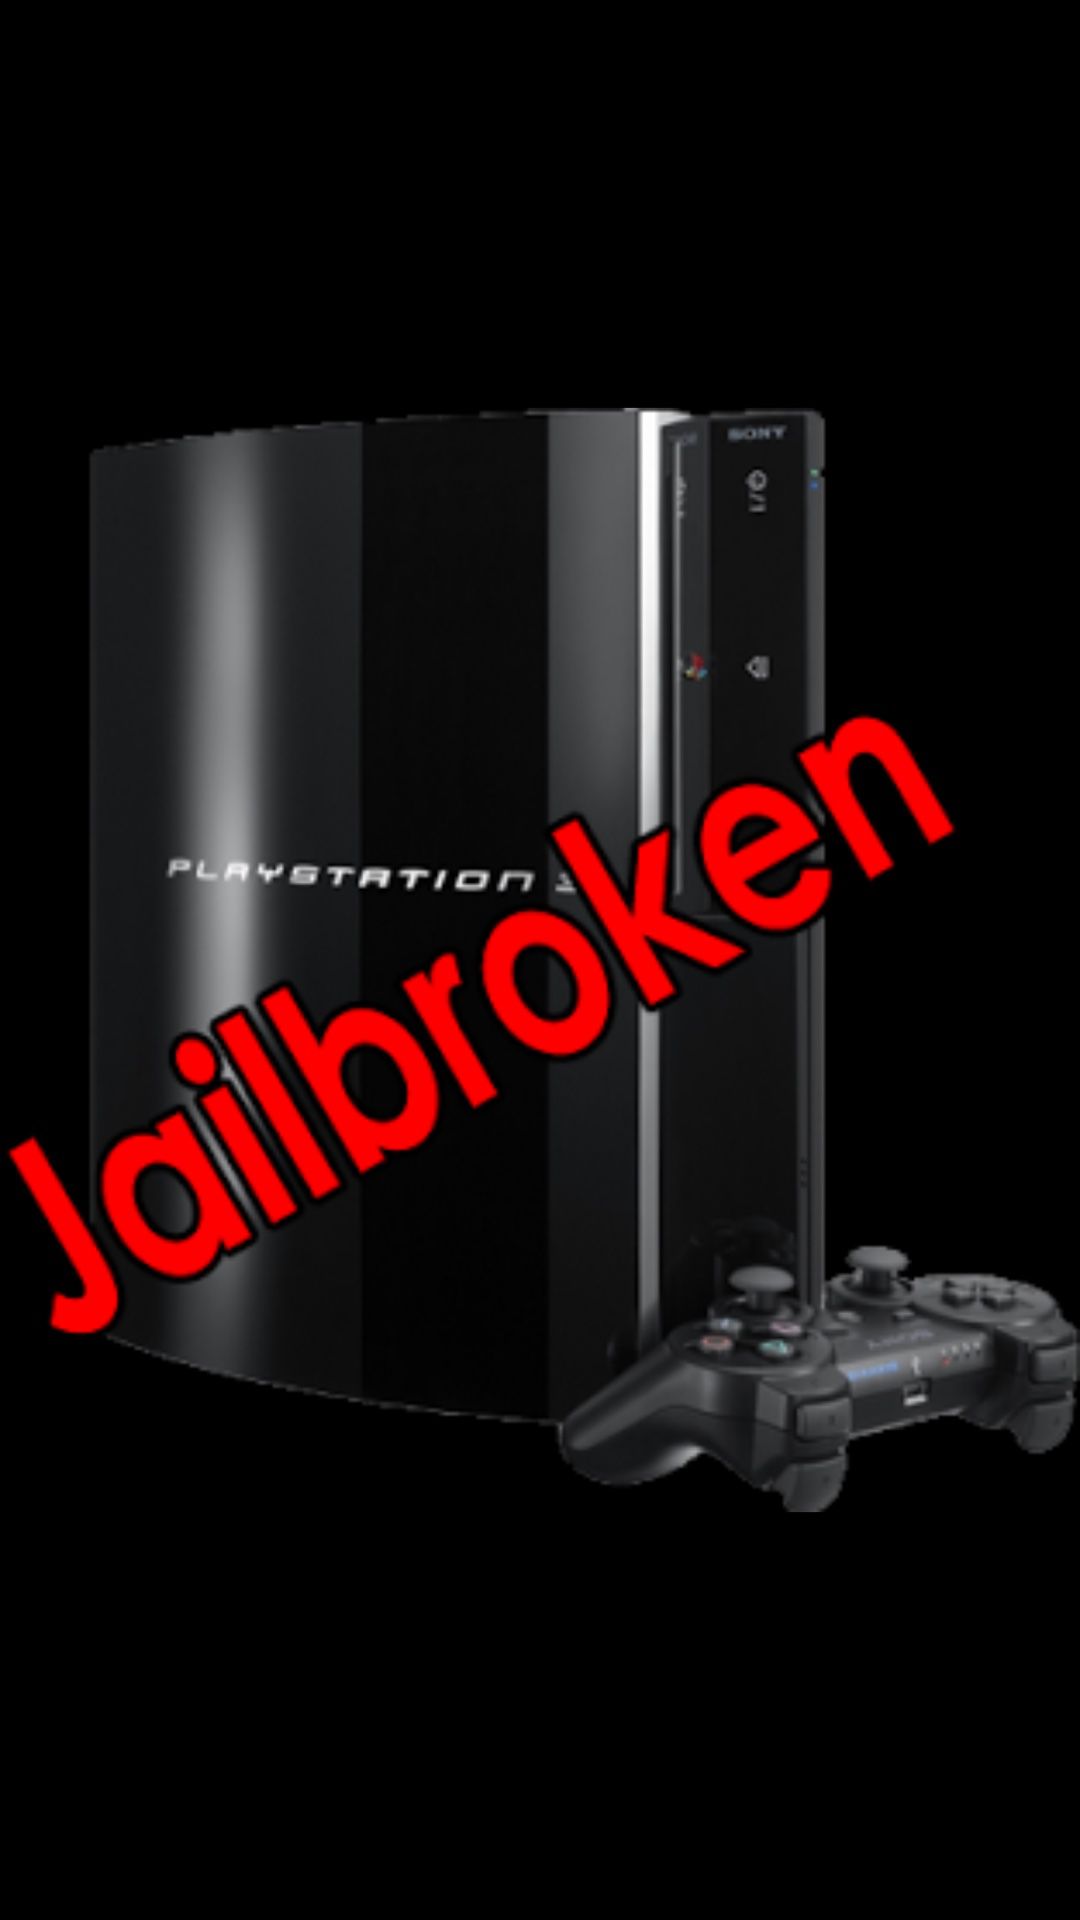 PS3 jail broken with mod menus